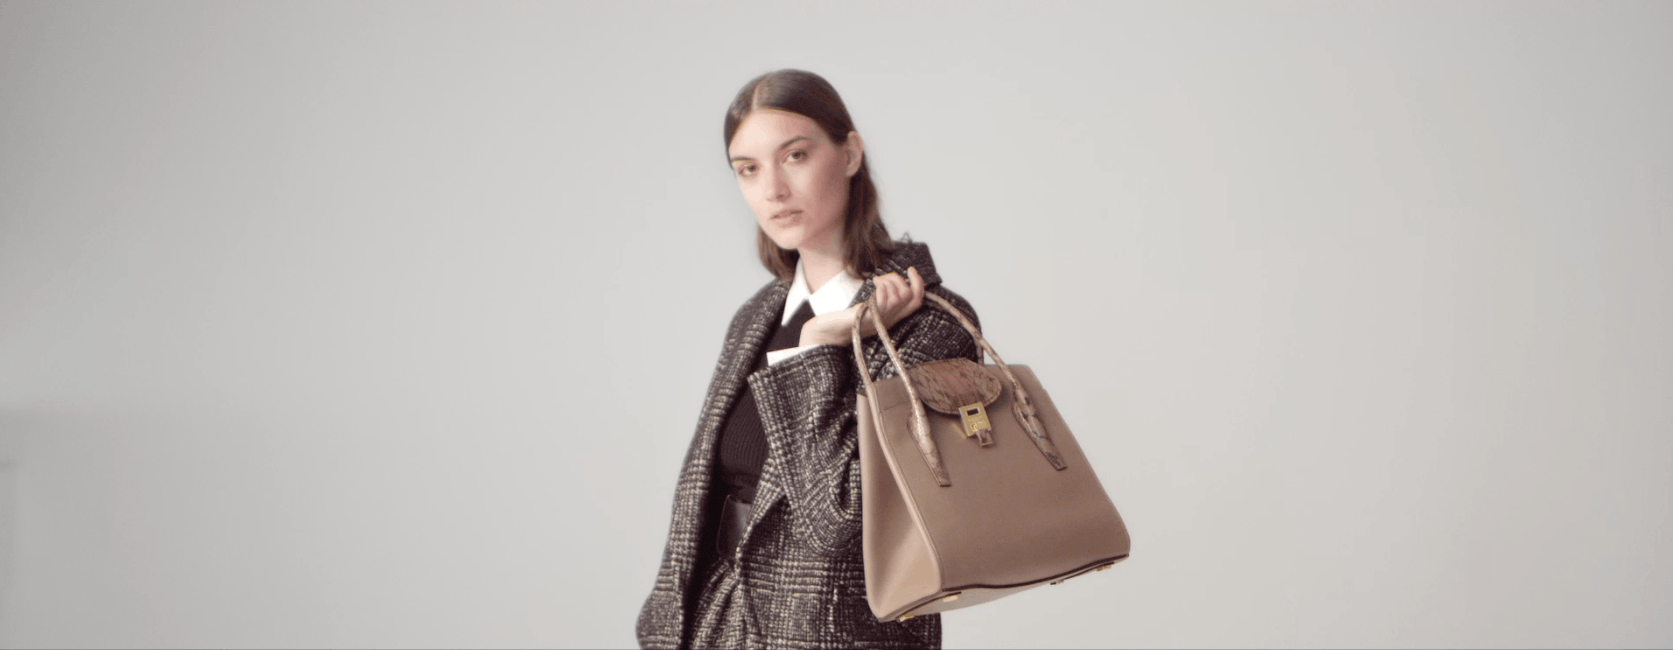 coat clothing apparel handbag accessories bag accessory person purse female